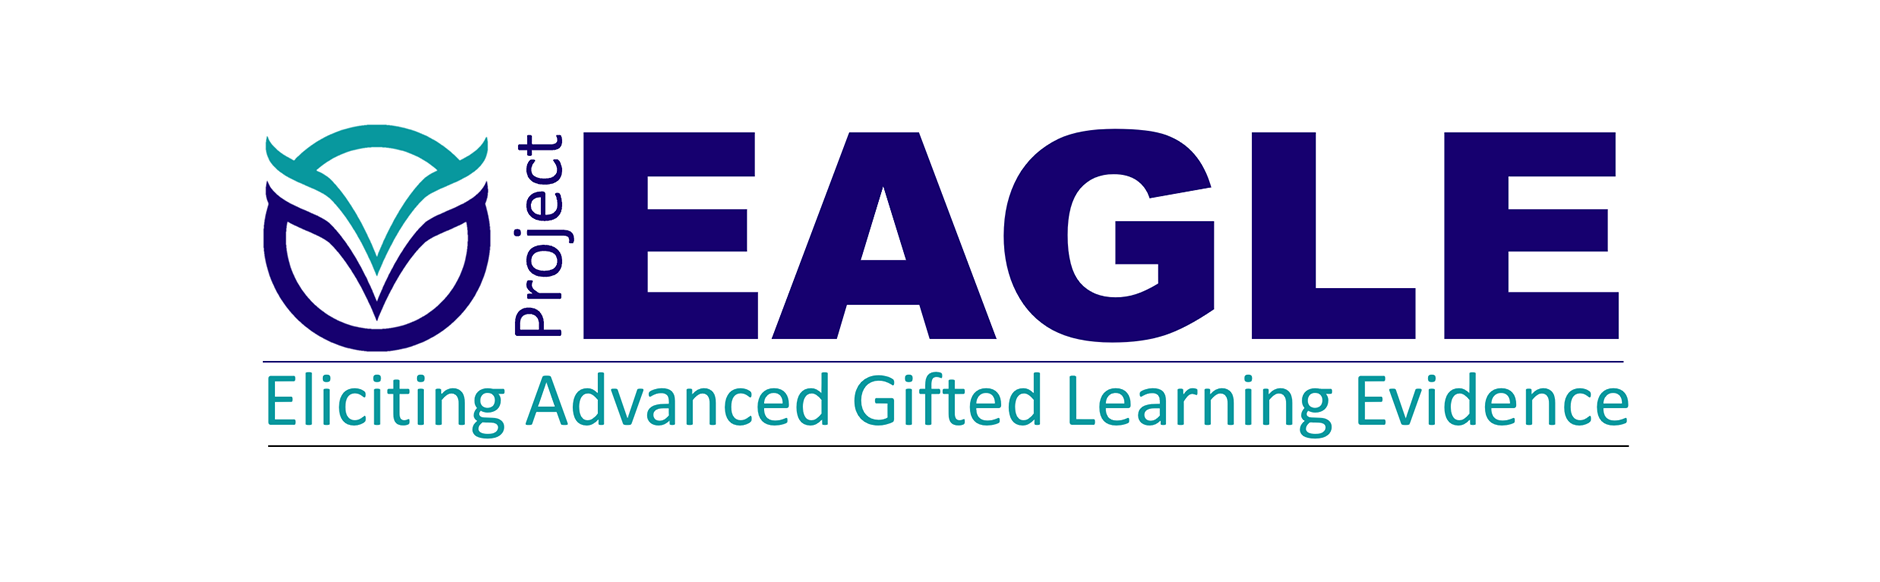 Project EAGLE logo